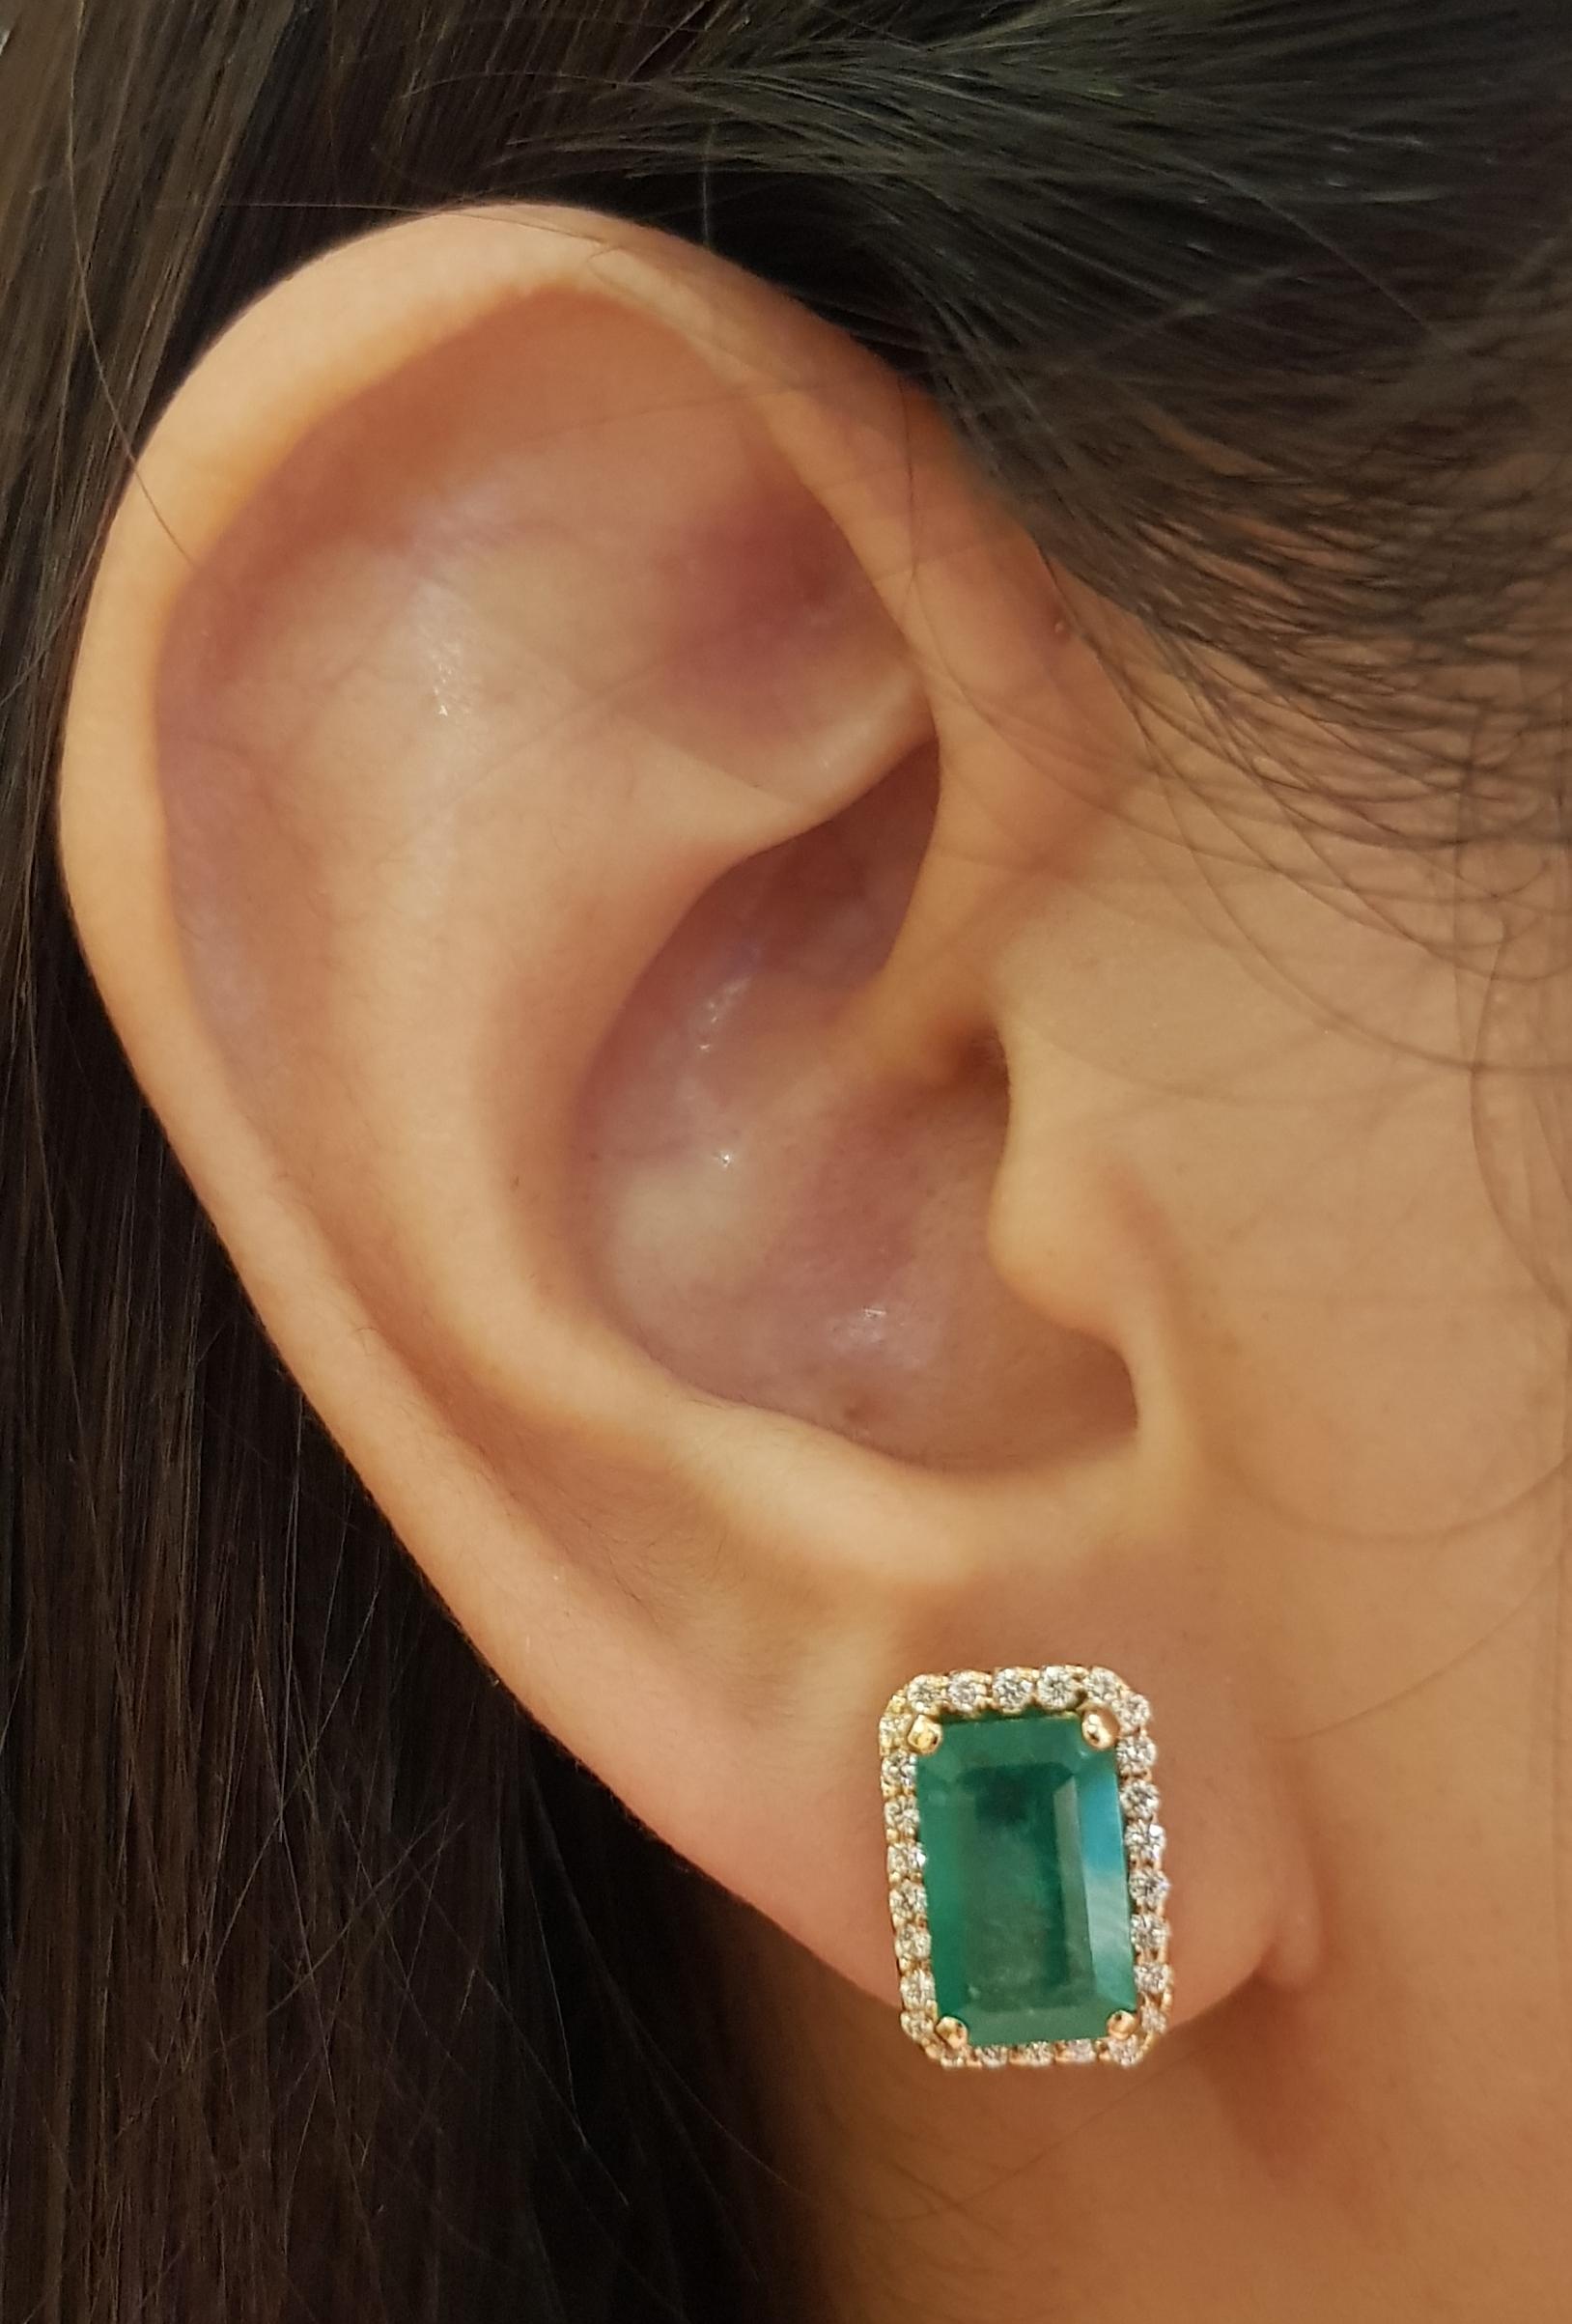 Emerald 4.32 carats with Diamond 0.37 carat Earrings set in 18 Karat Rose  Gold Settings 

Width:   0.80 cm 
Length:  1.20 cm
Total Weight: 5.22 grams

